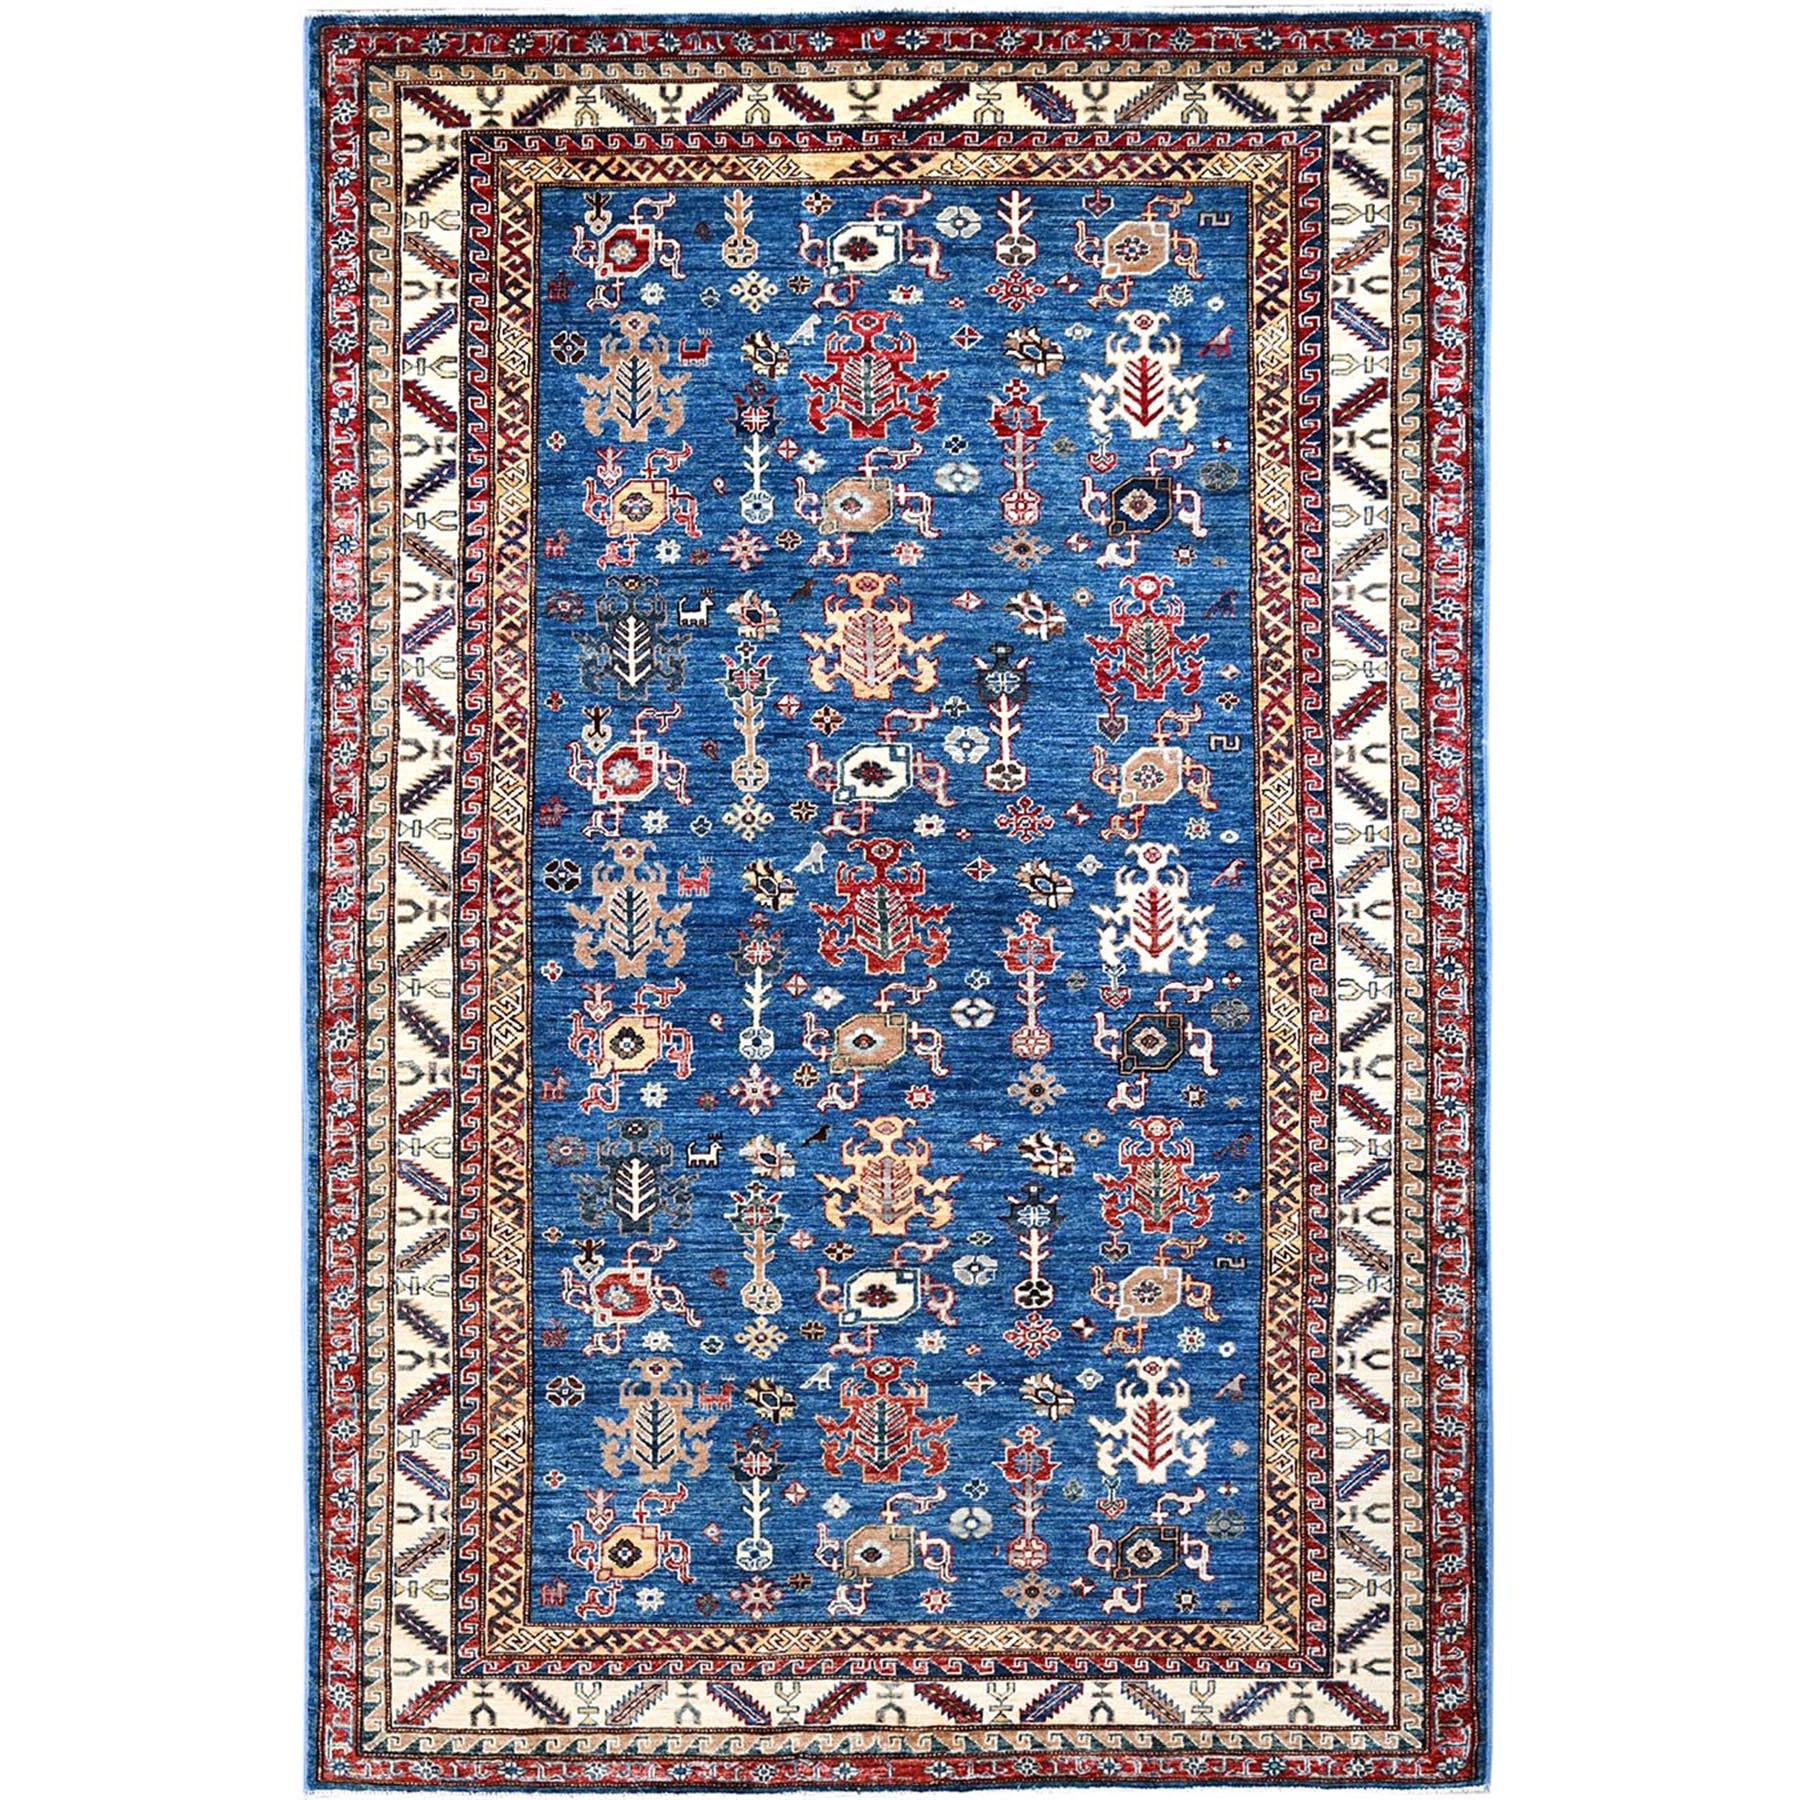 Cornflower Blue, Vegetables Dyes Afghan Super Kazak with Birds and Animal Figurines, Geometric Medallion Design Denser Weave, Hand Knotted Natural Wool Oriental Rug